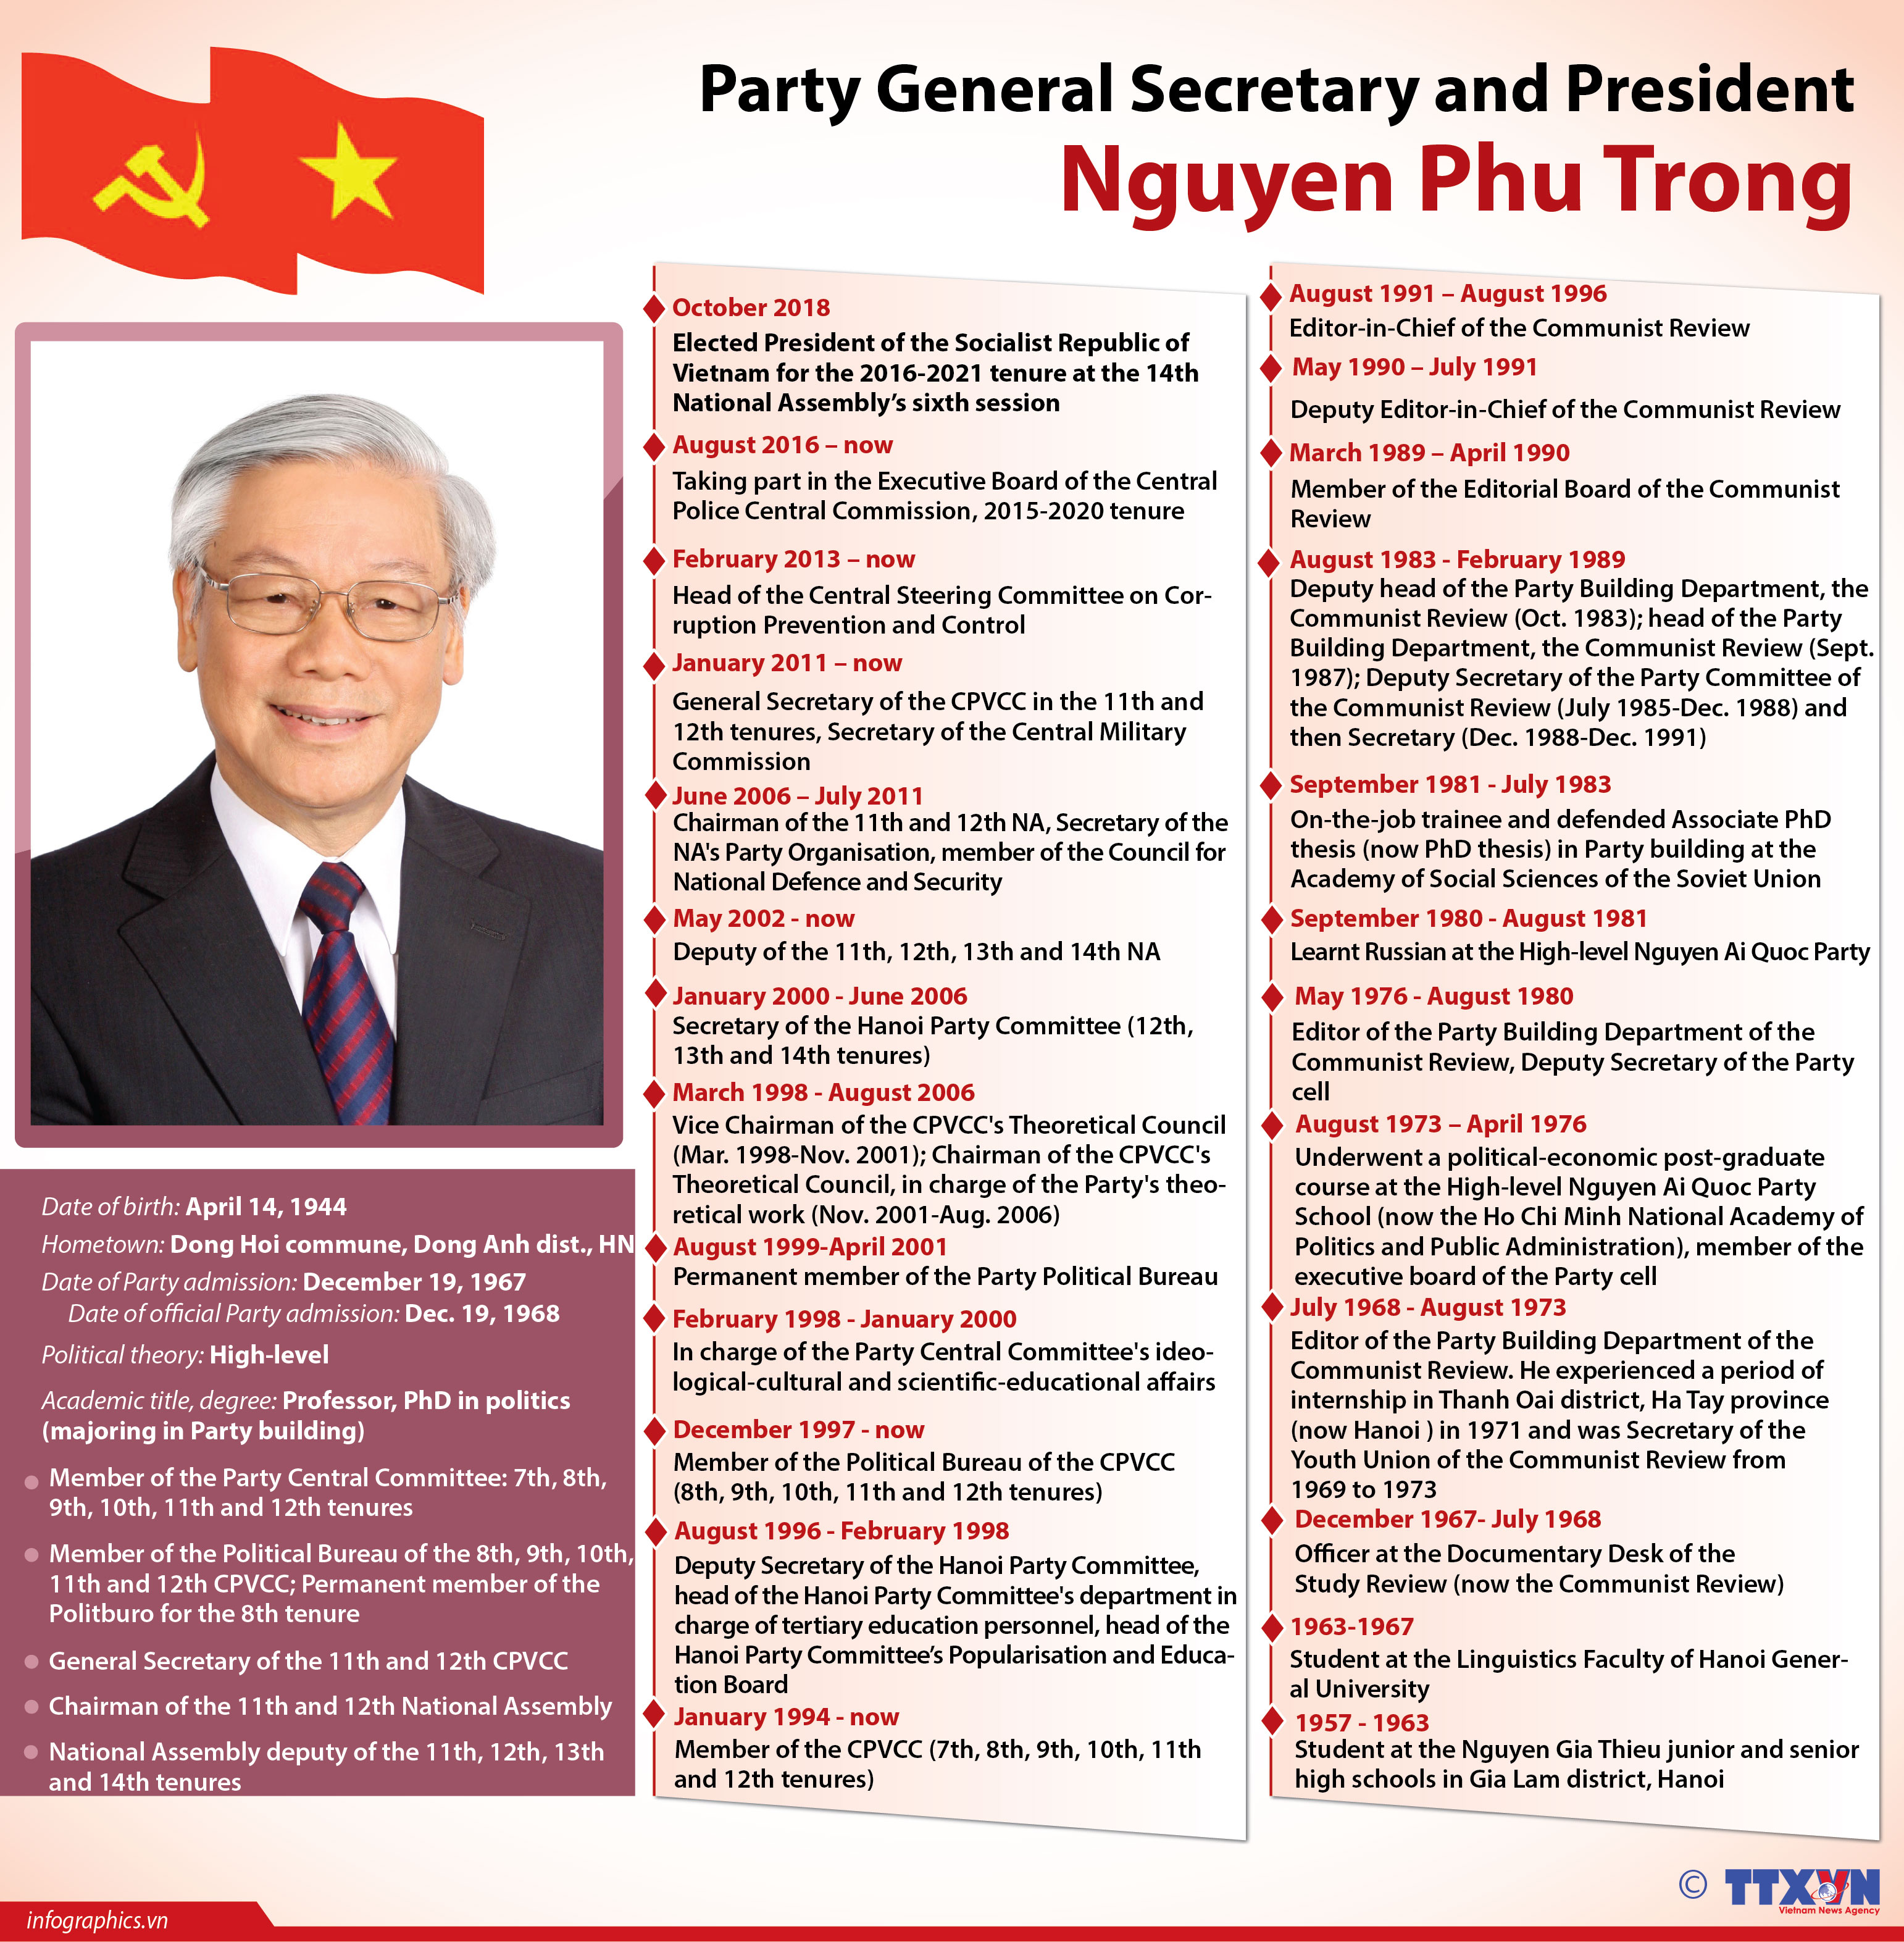 Party_general_secretary_and_president_nguyen_phu_trong_Rubybbb.jpg